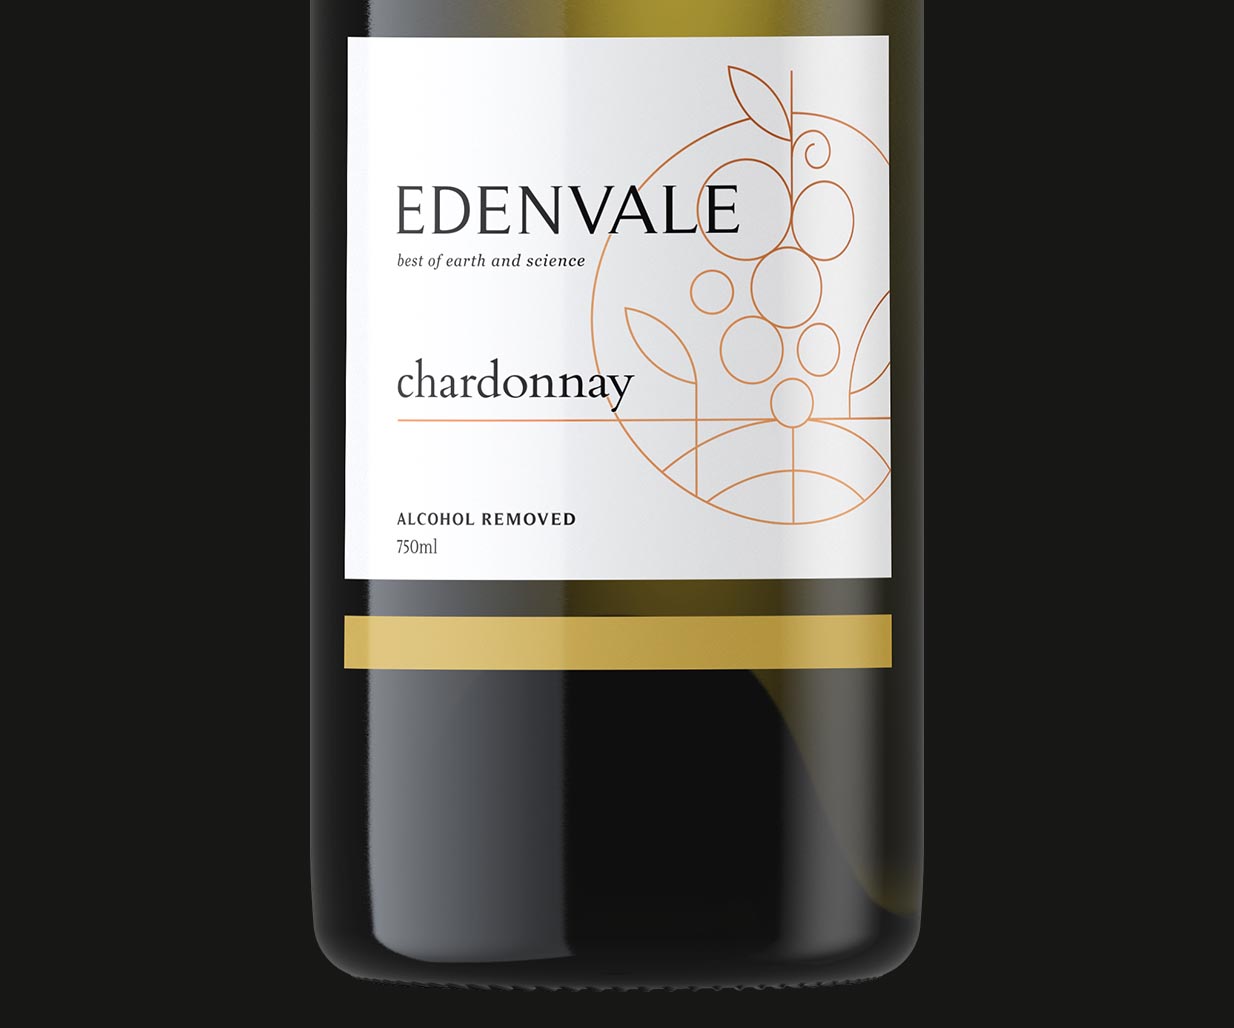 Australian wine label designers, Percept, create branding and packaging design for Edenvale, project image G